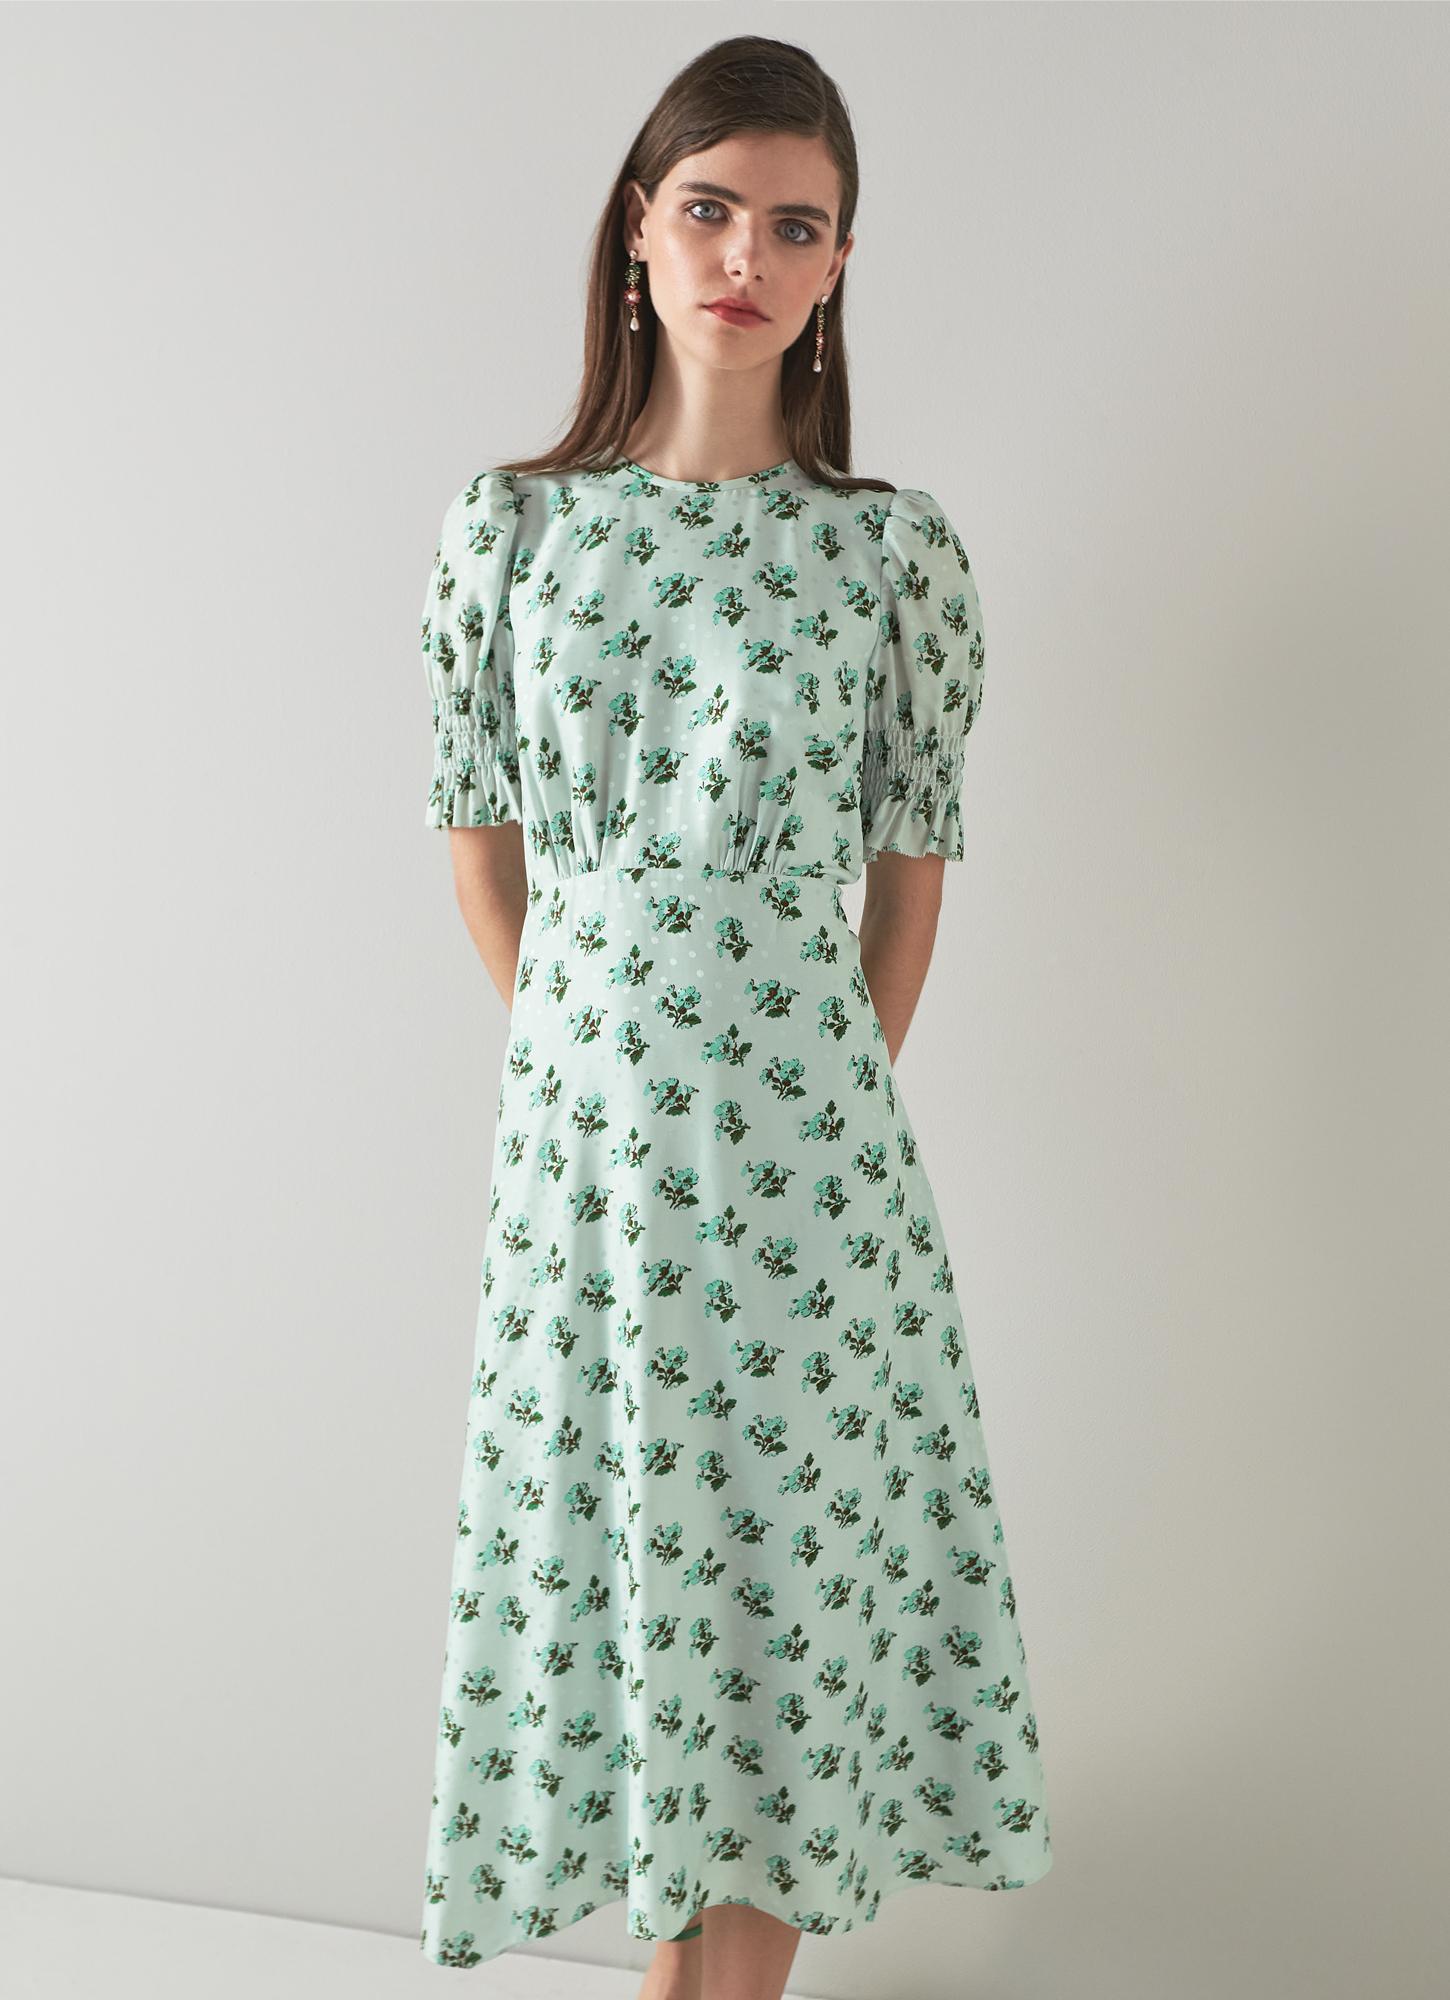 L.K.Bennett Tabitha Green Silk-Blend Spot Jacquard Primula Print Dress, Morning Mist Multi